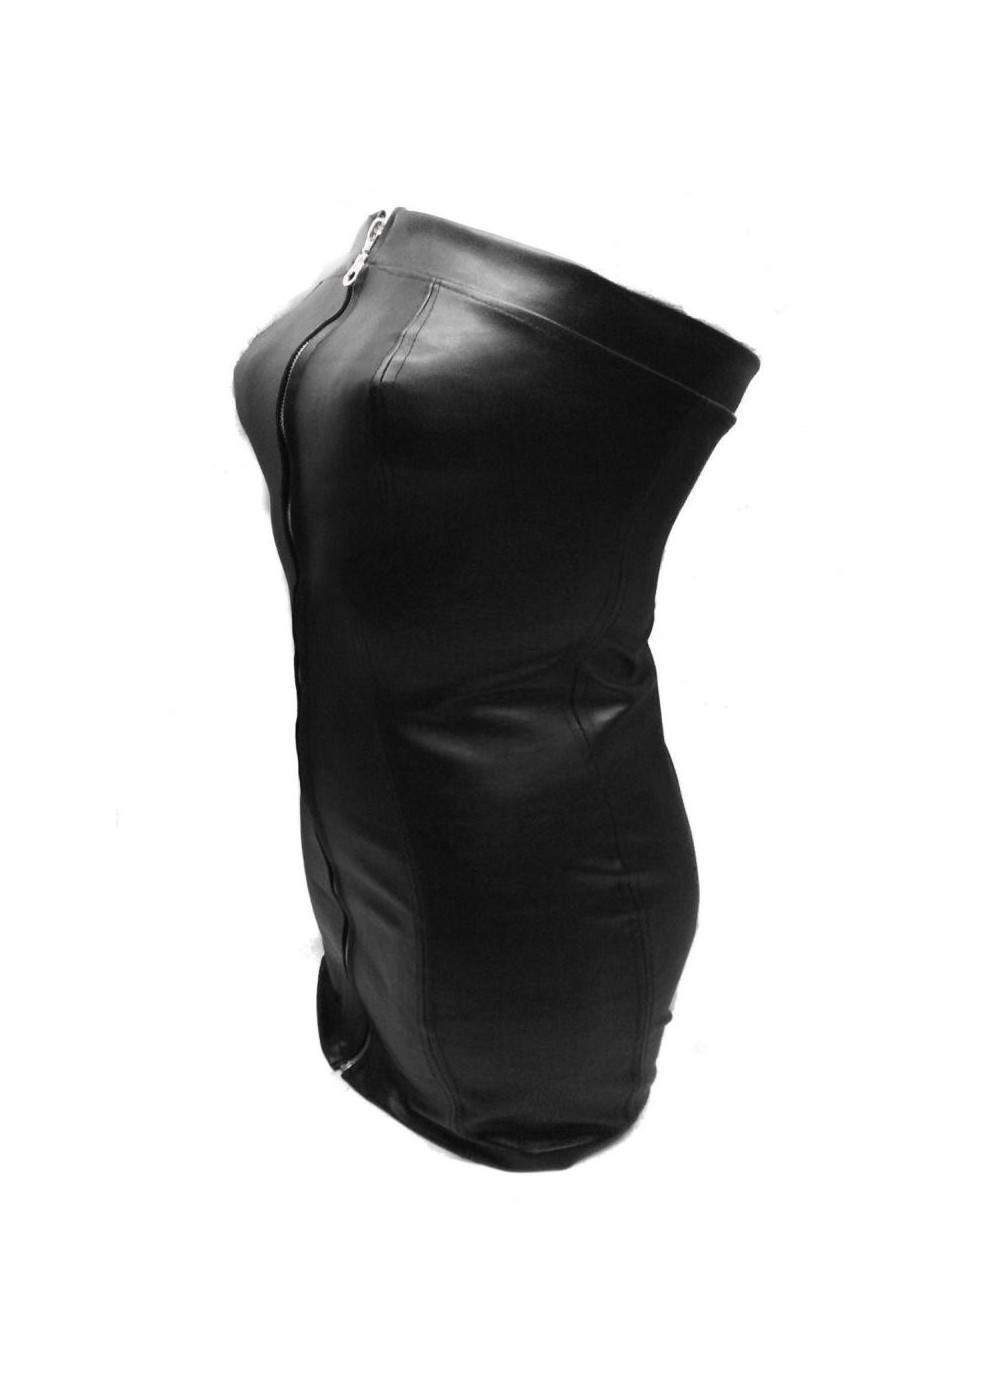 Designer leather dress black size L - XXL (44 - 52) - 